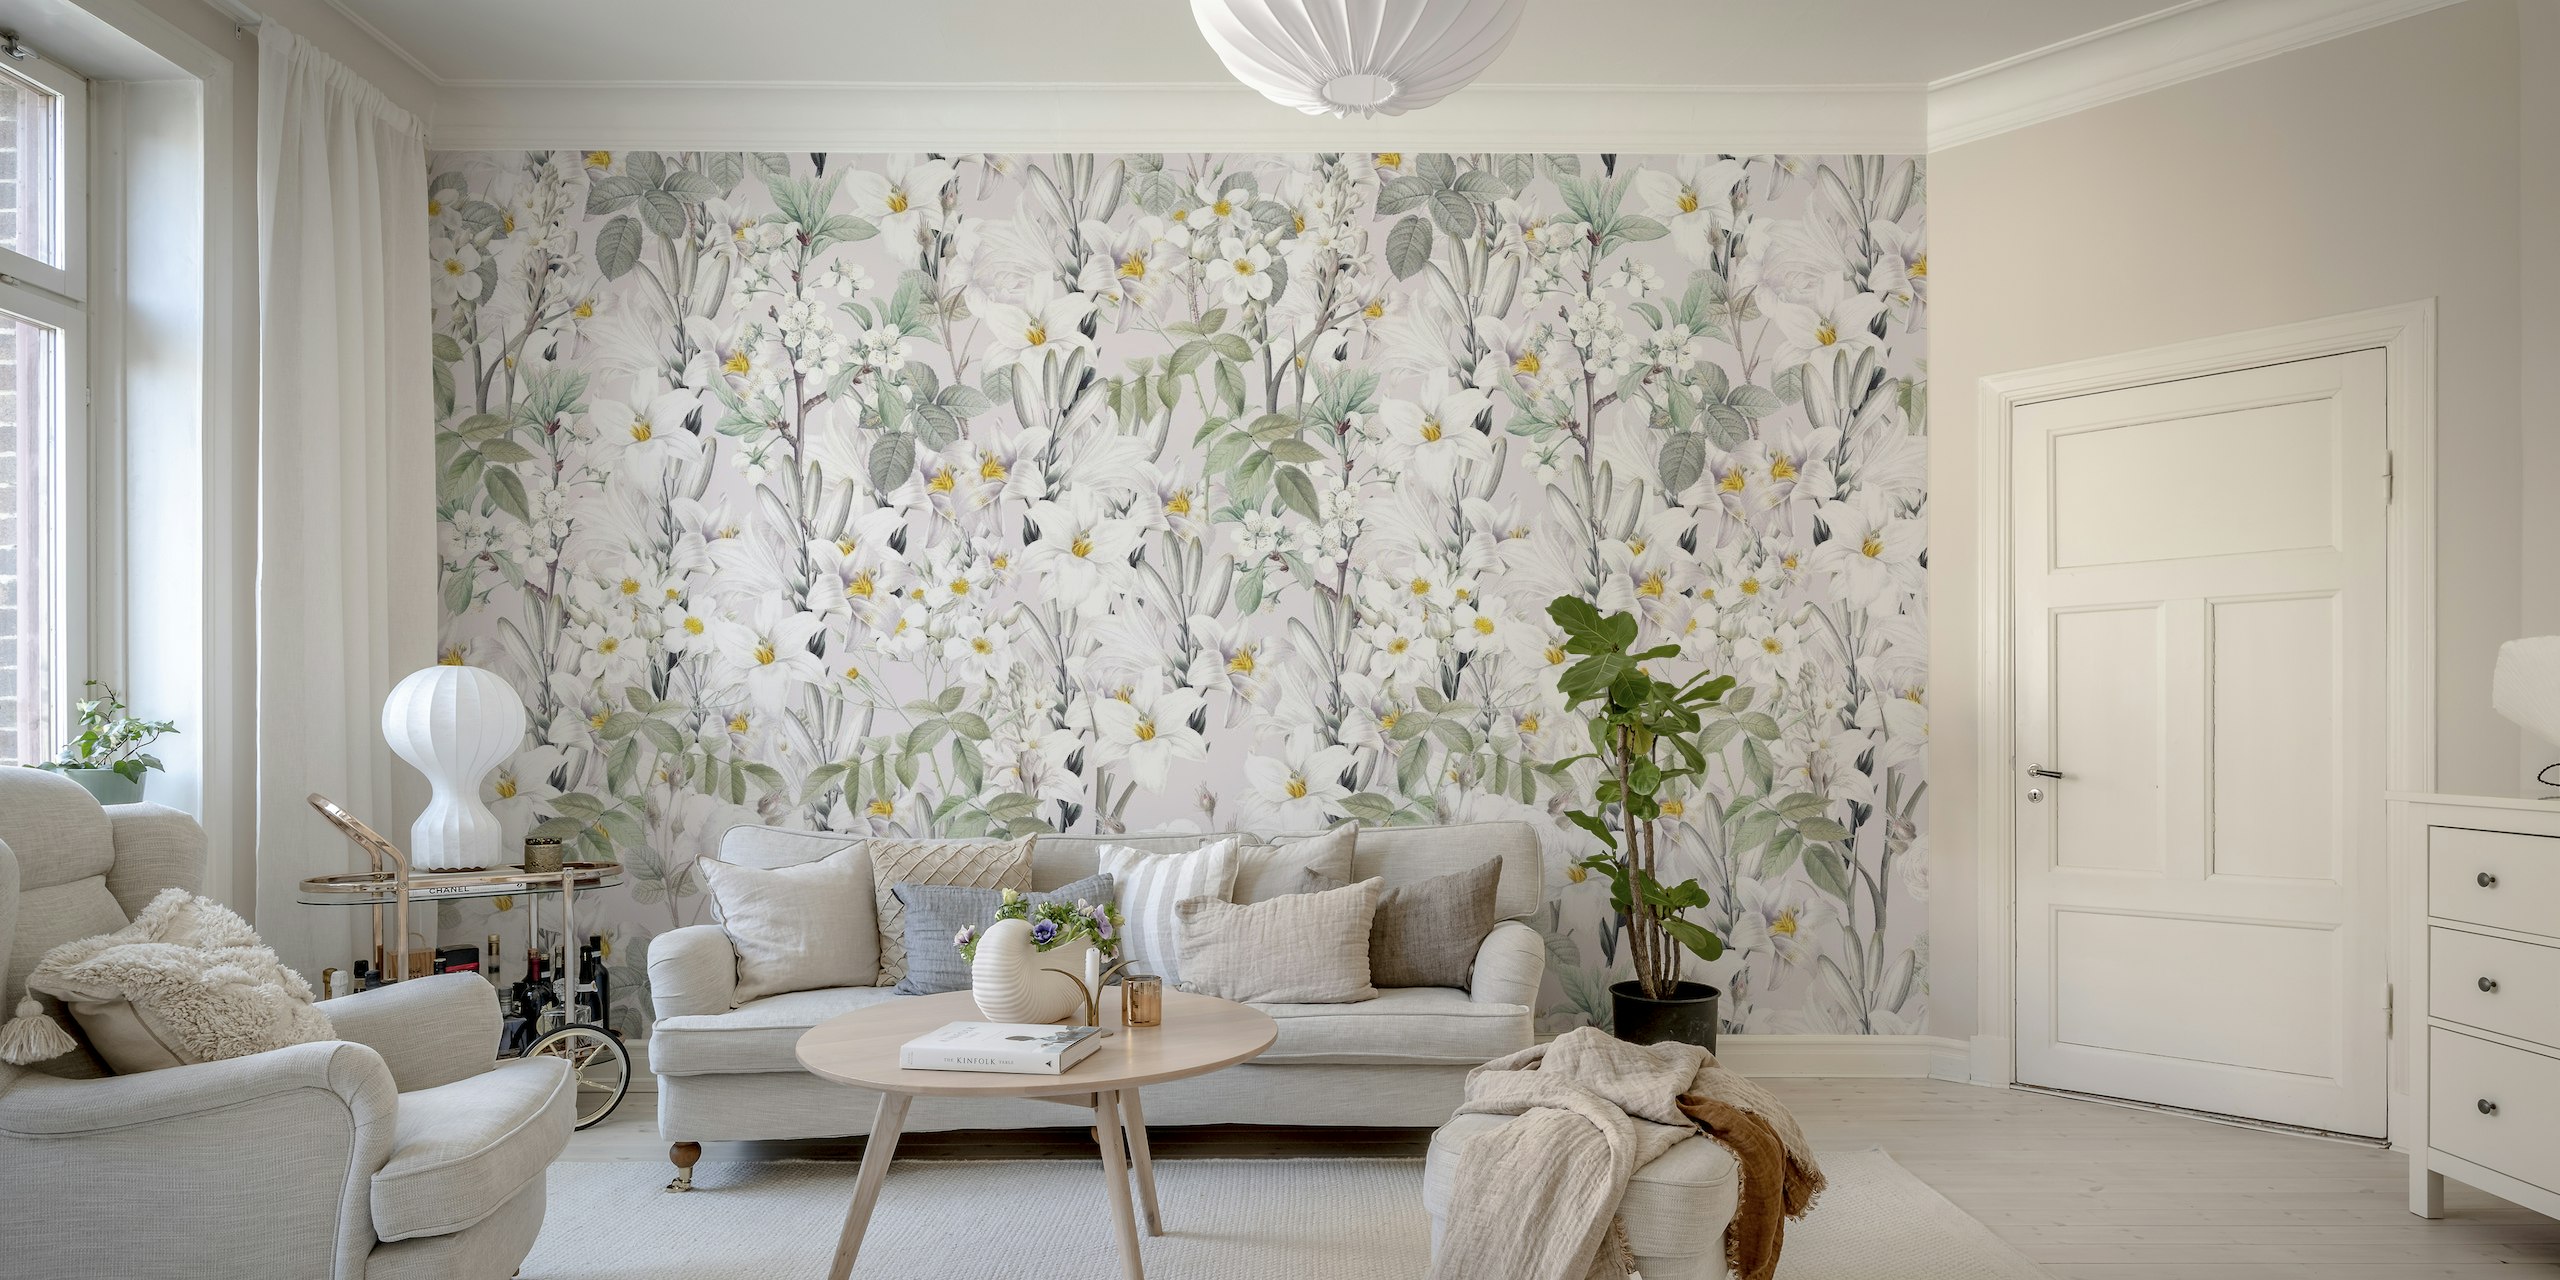 Magic Garden vægmaleri med hvide blomster og grønt løv